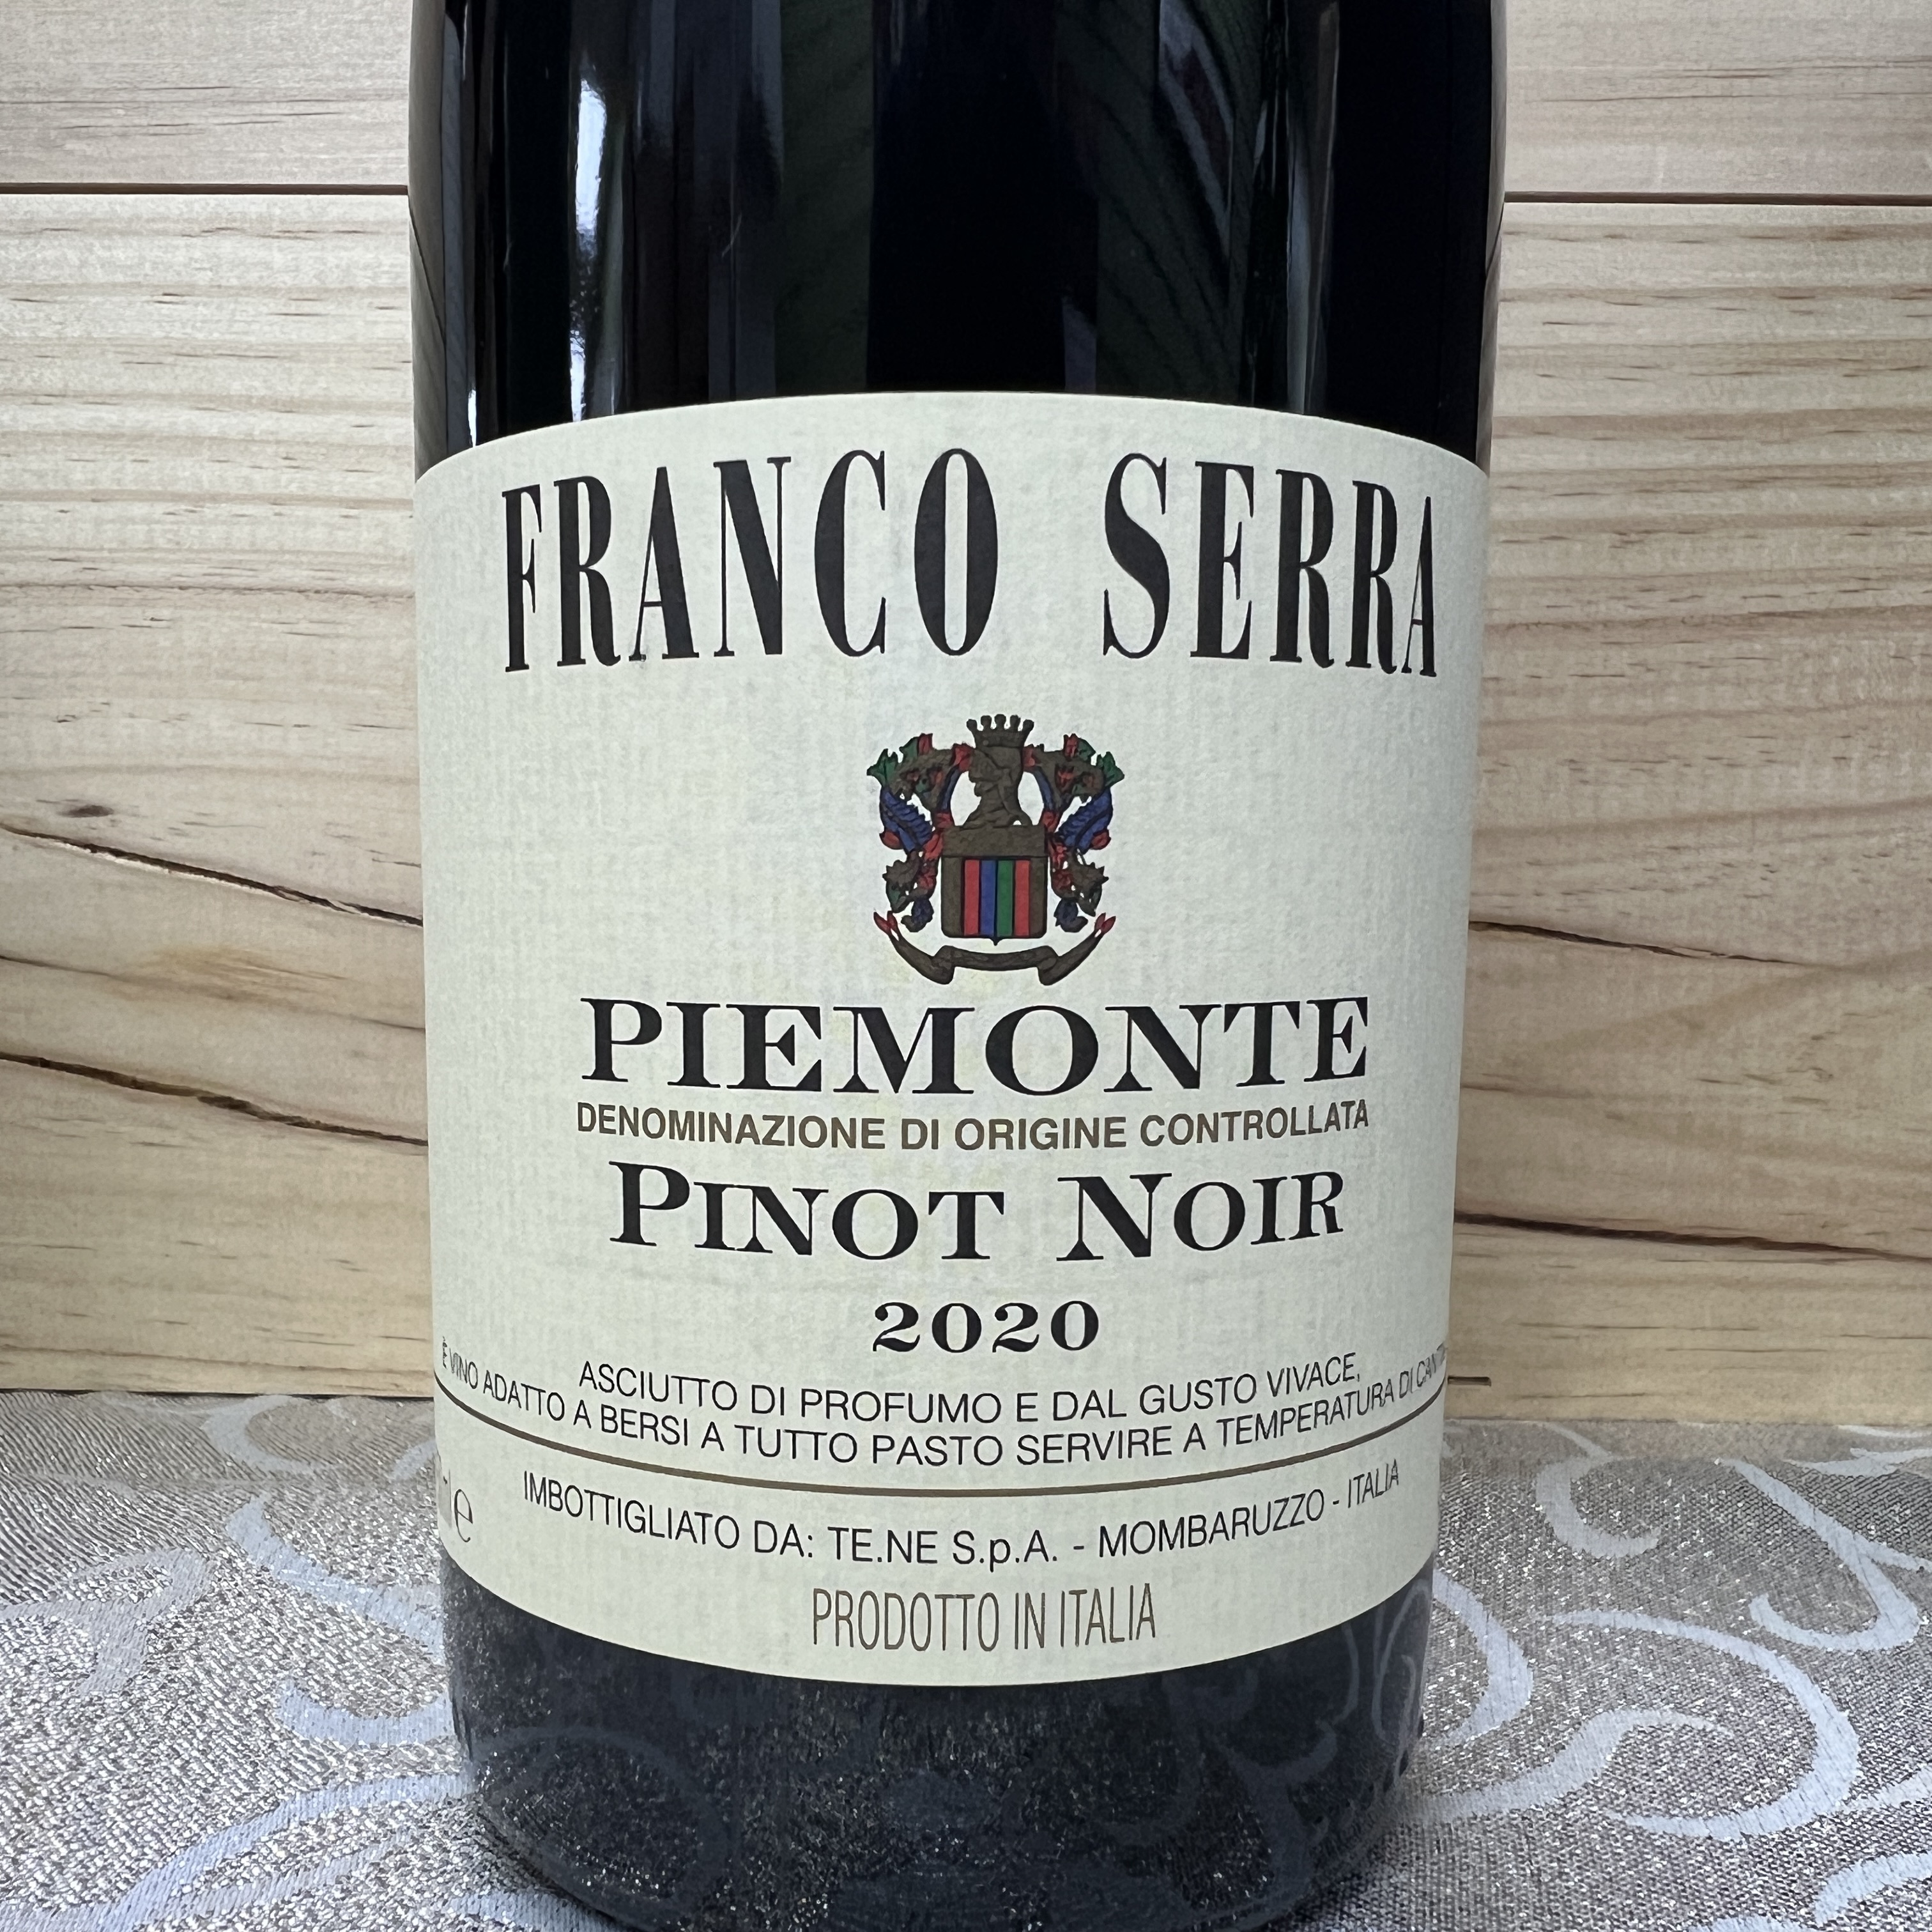 Franco Serra Pinot Noir Piemonte 2020